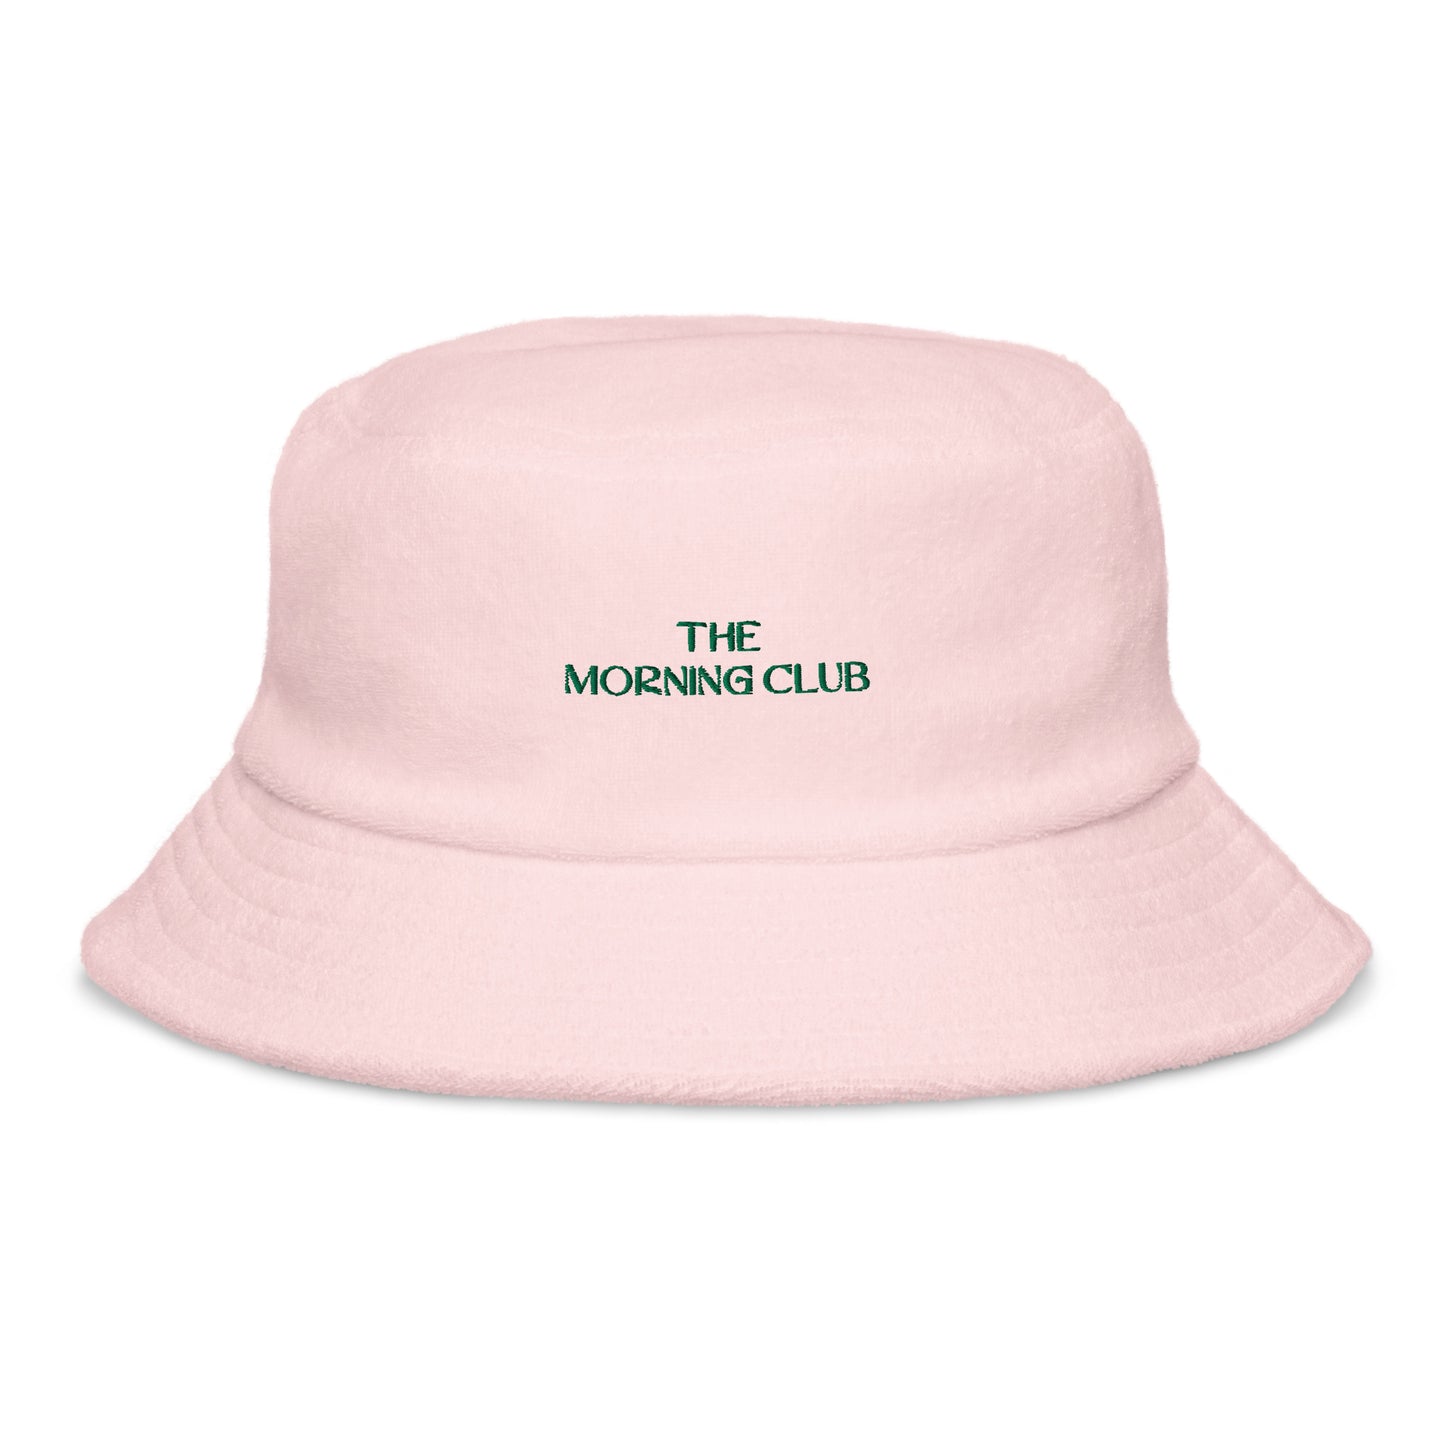 The Morning Club Bucket hat